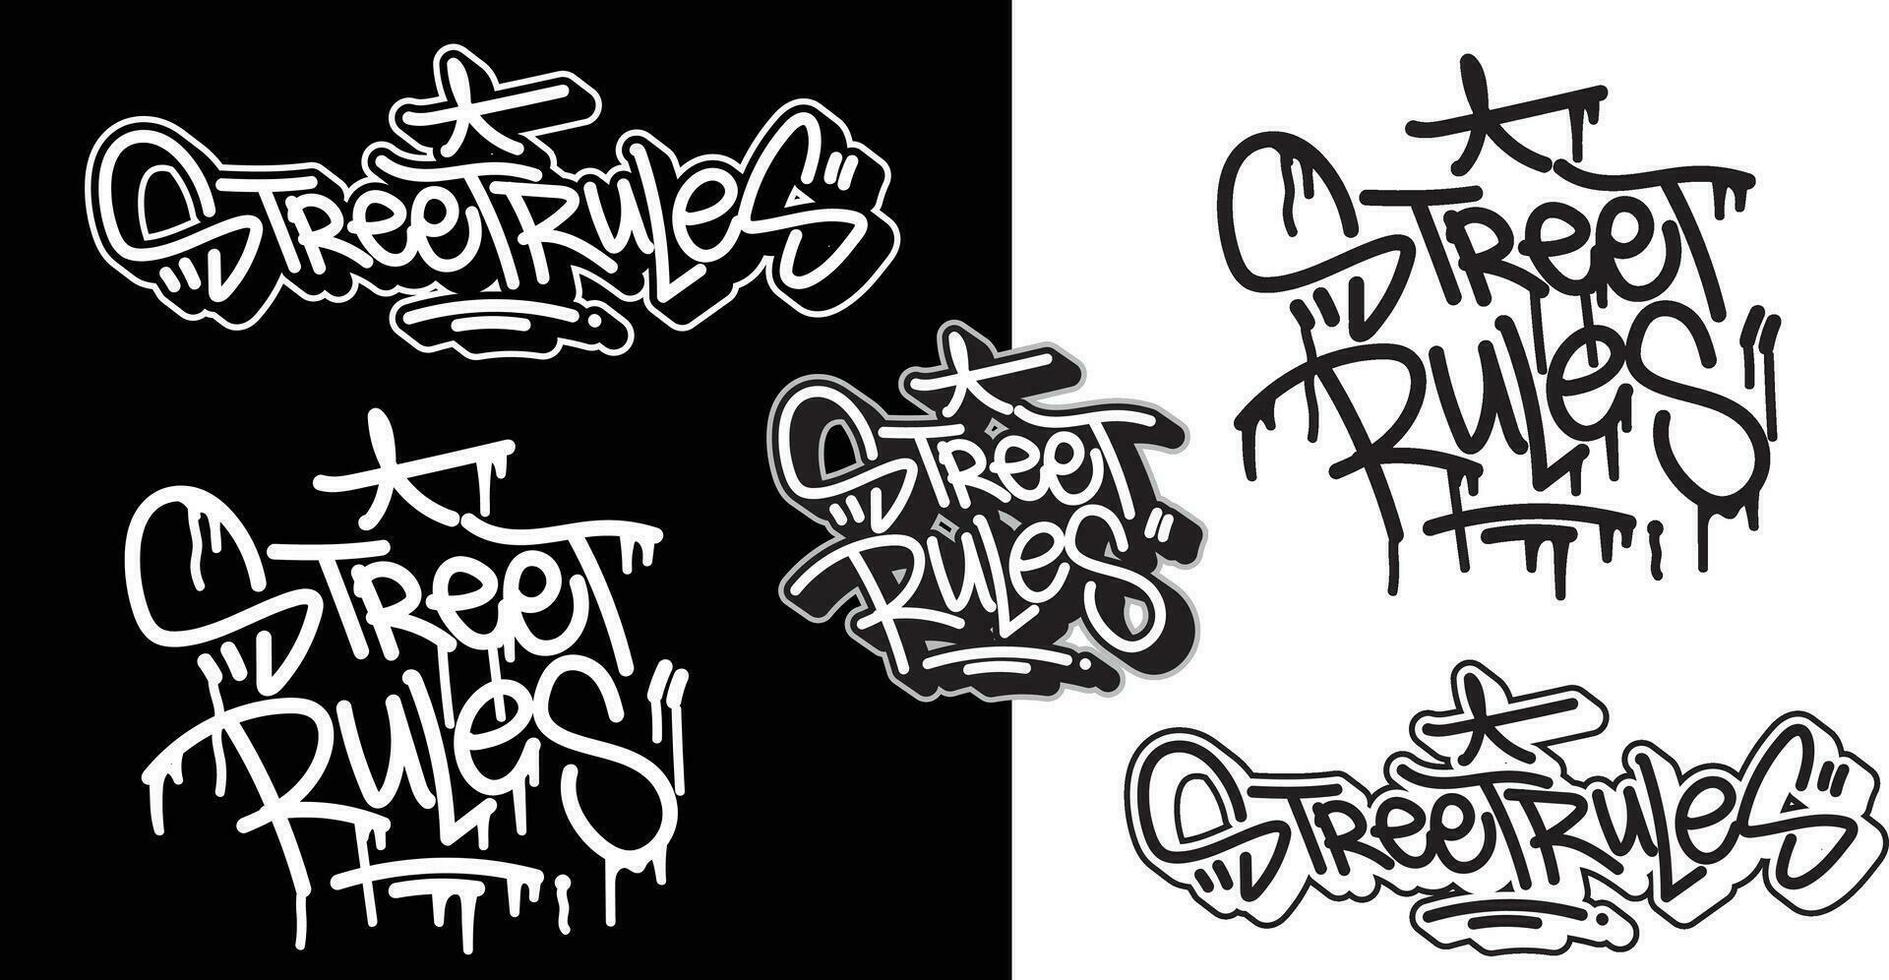 Street Rules text in graffiti tag font style. Graffiti text vector illustrations.